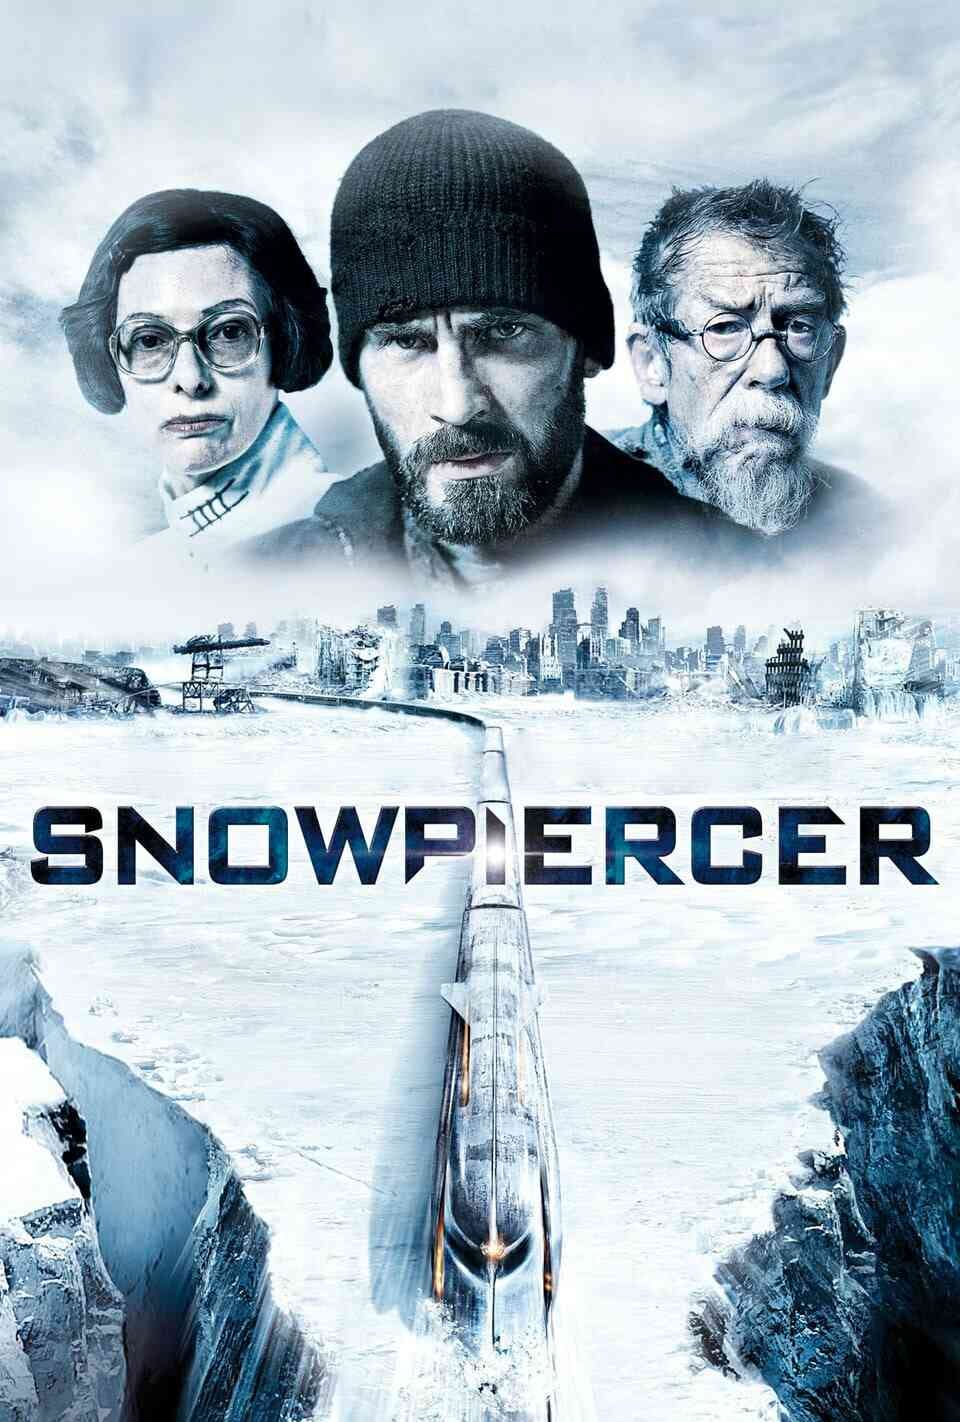 Read Snowpiercer screenplay.